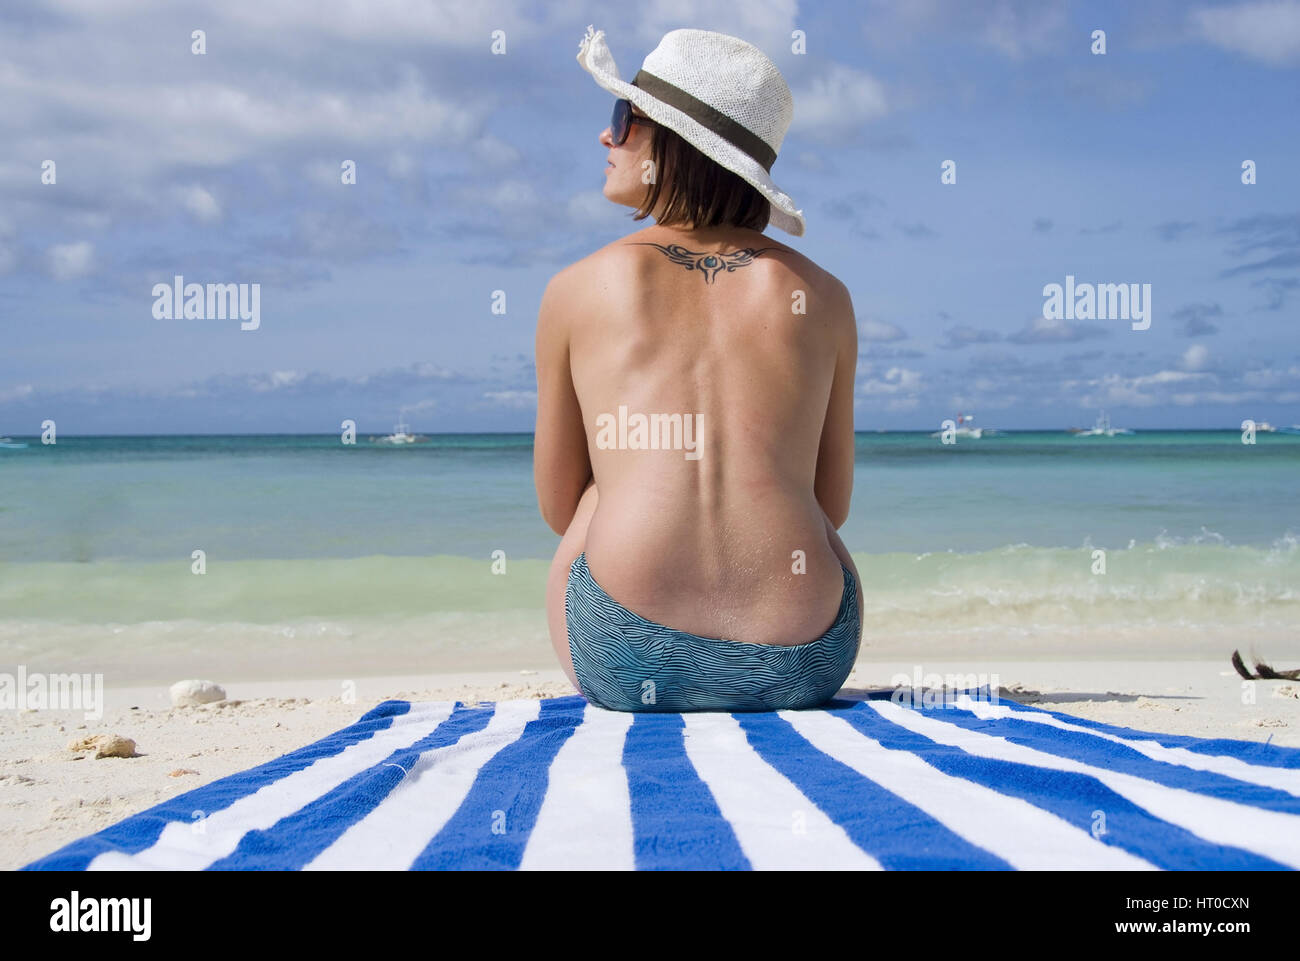 Junge Frau sitzt oben ohne am Strand - woman on the beach Stock Photo